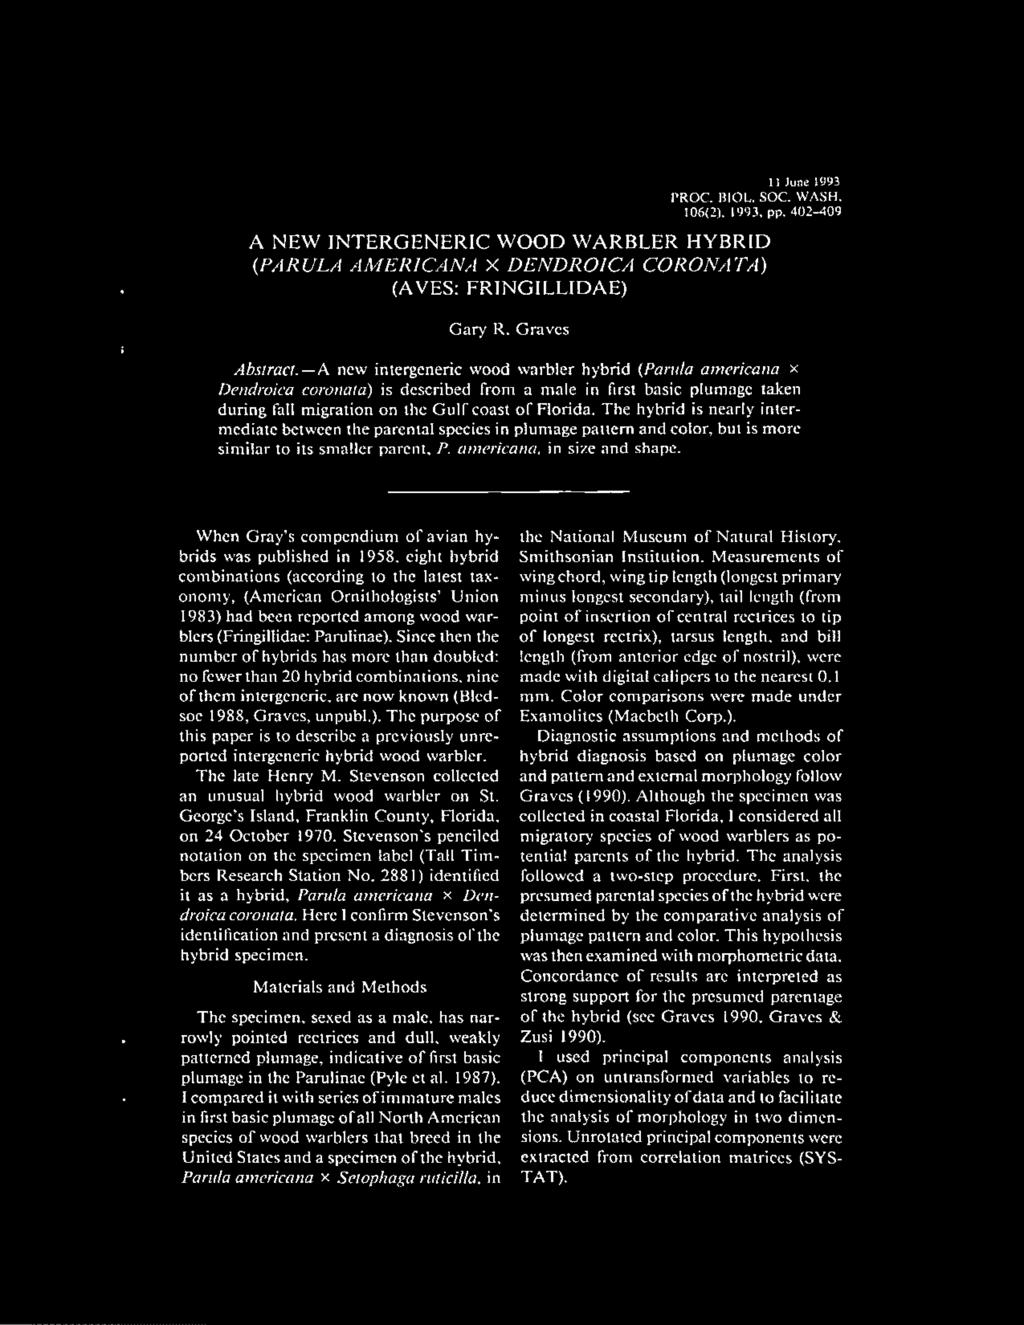 1] June S993 PROC. BIOL. SOC. WASH. 106(11, 1493. pp. 402-409 A NEW INTERGENERIC WOOD WARBLER HYBRID (PARULA AMERICANA X DENDROICA CORONATA) (AVES: FRINGILLIDAE) Gary R. Graves Abstract.